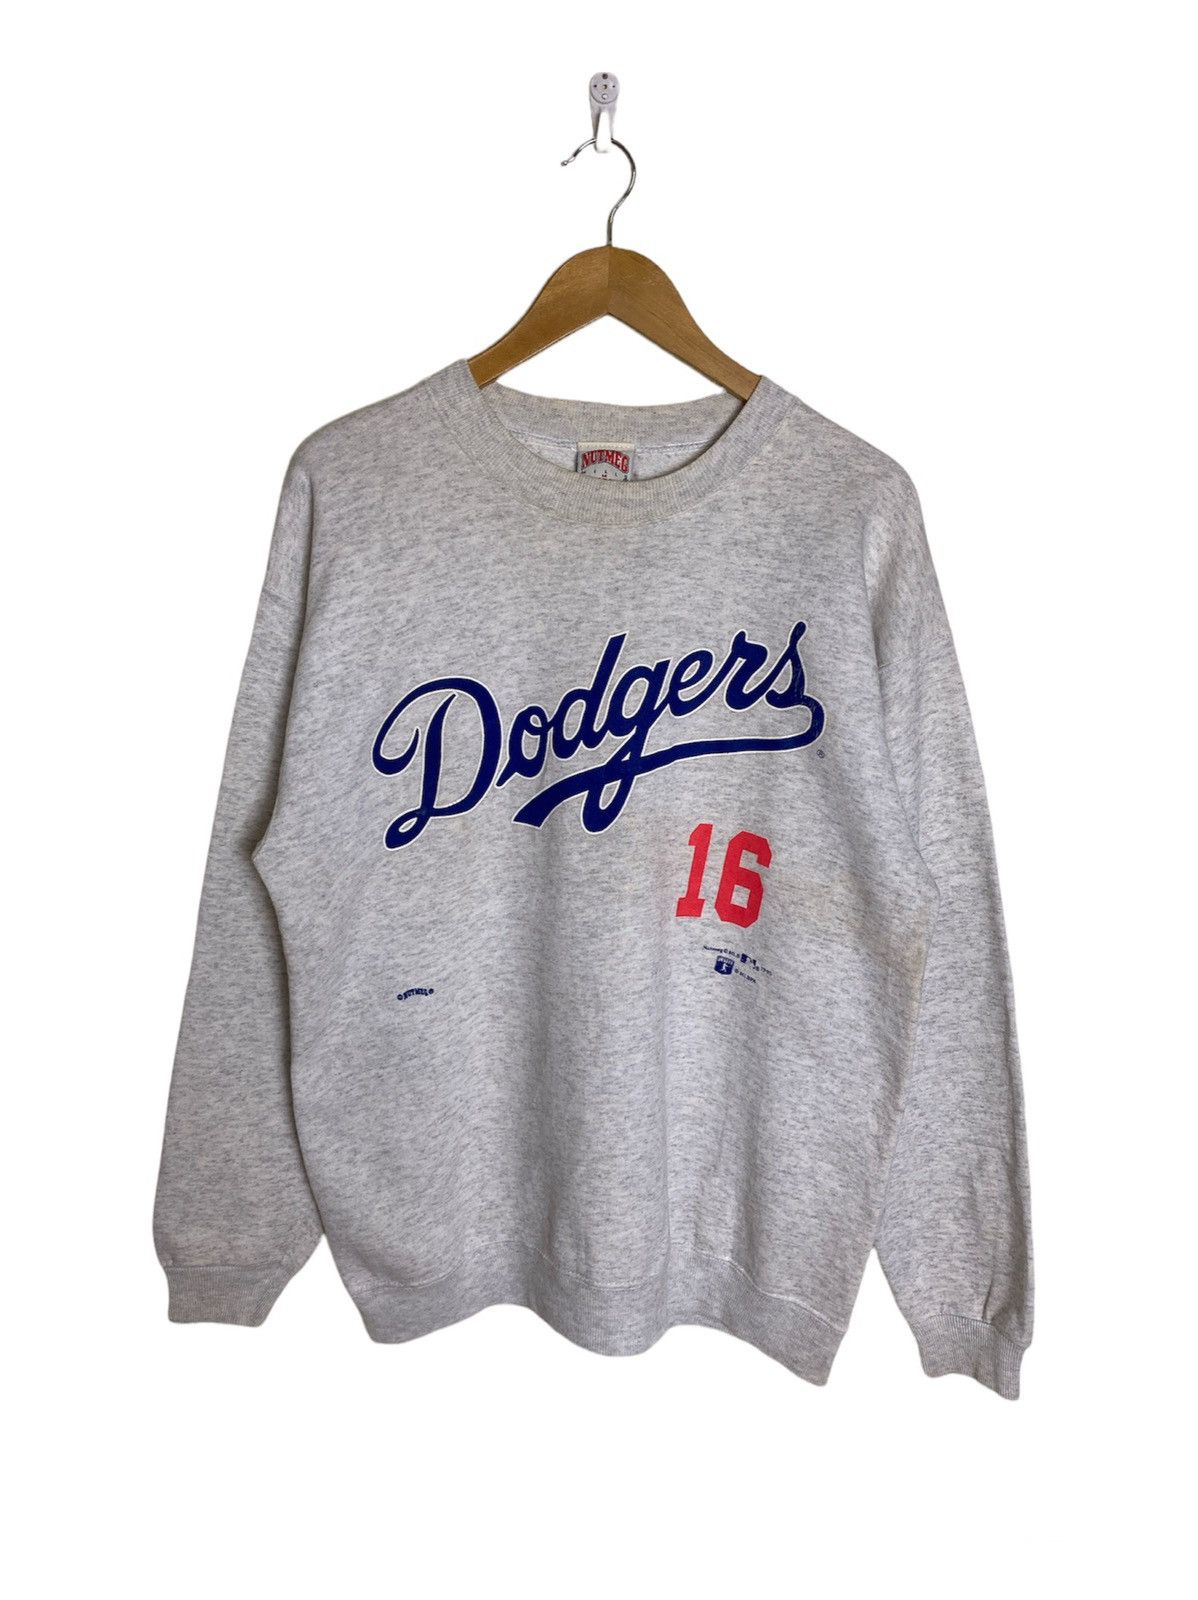 Vintage 95 Nutmeg LA Dodgers Hideo Nomo 16 Sweatshirt - 1